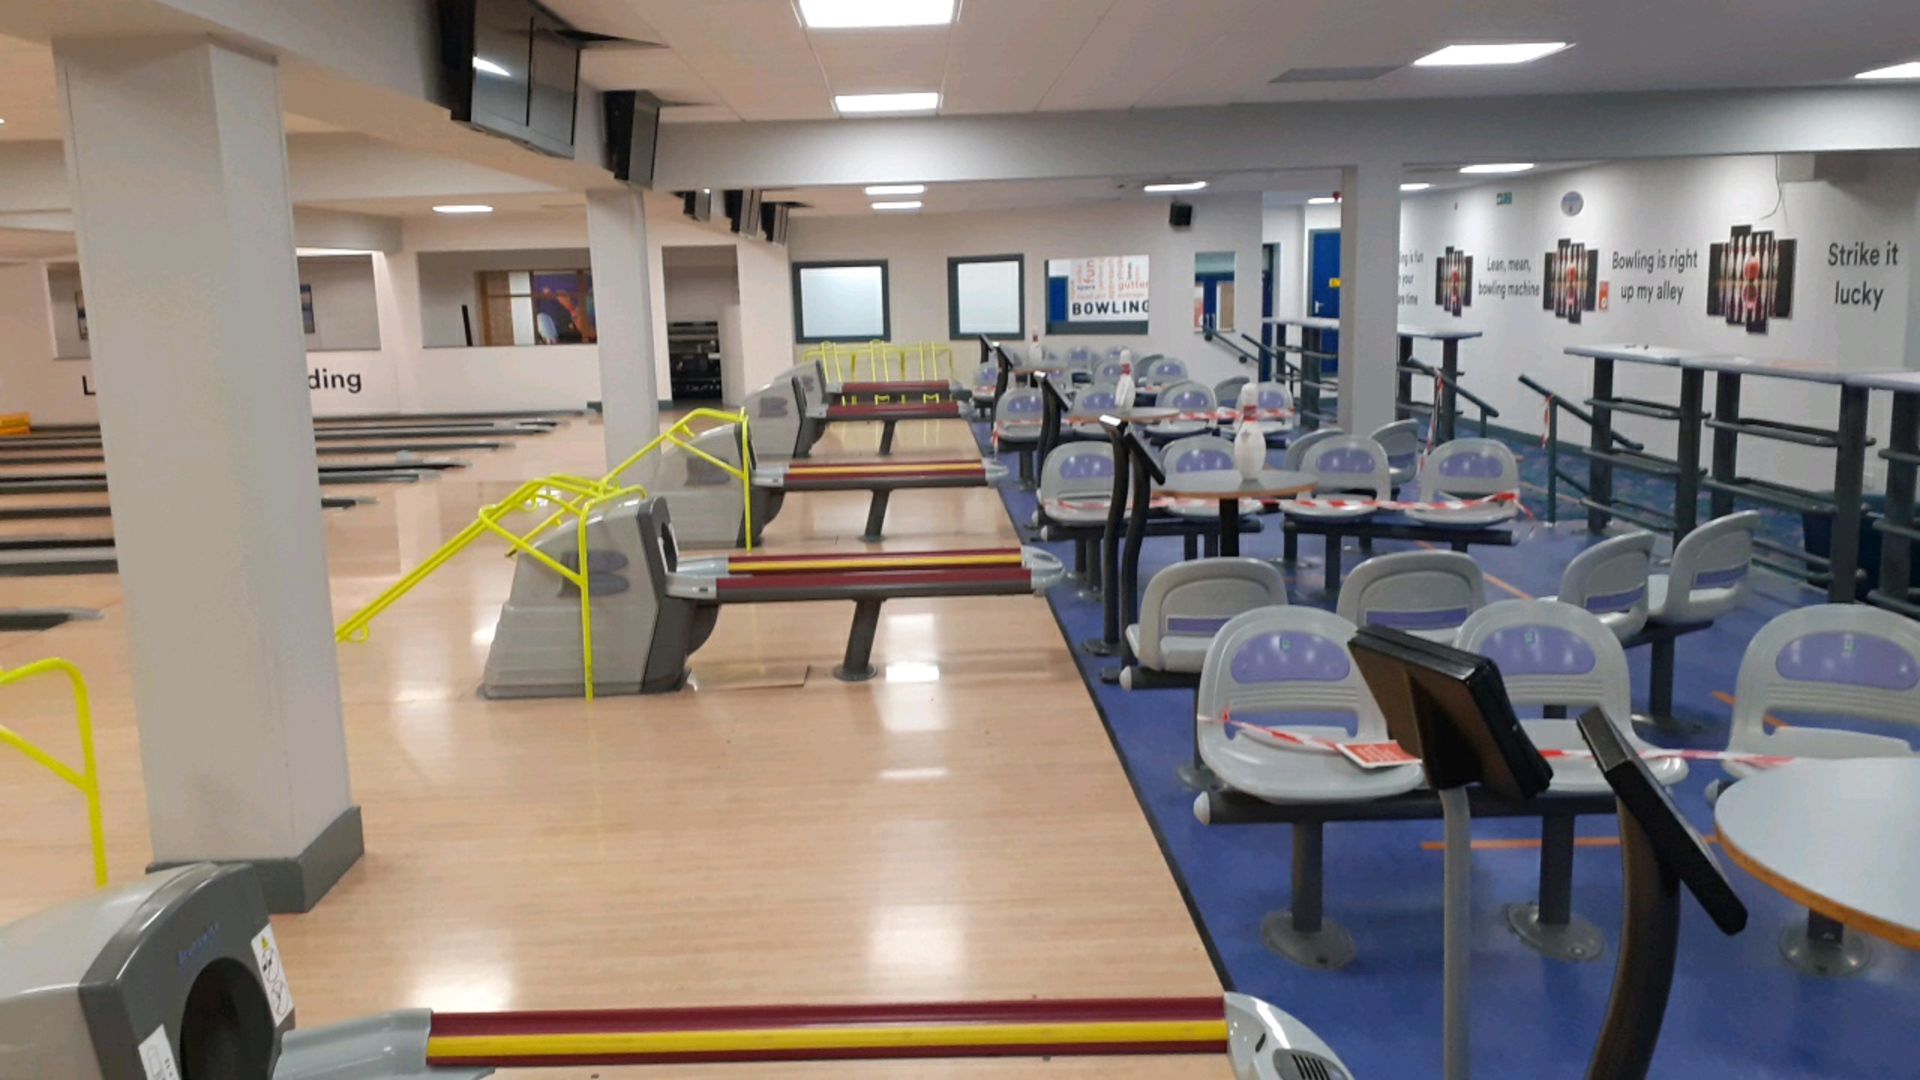 Brunswick 10 lane bowling alley - Image 14 of 42